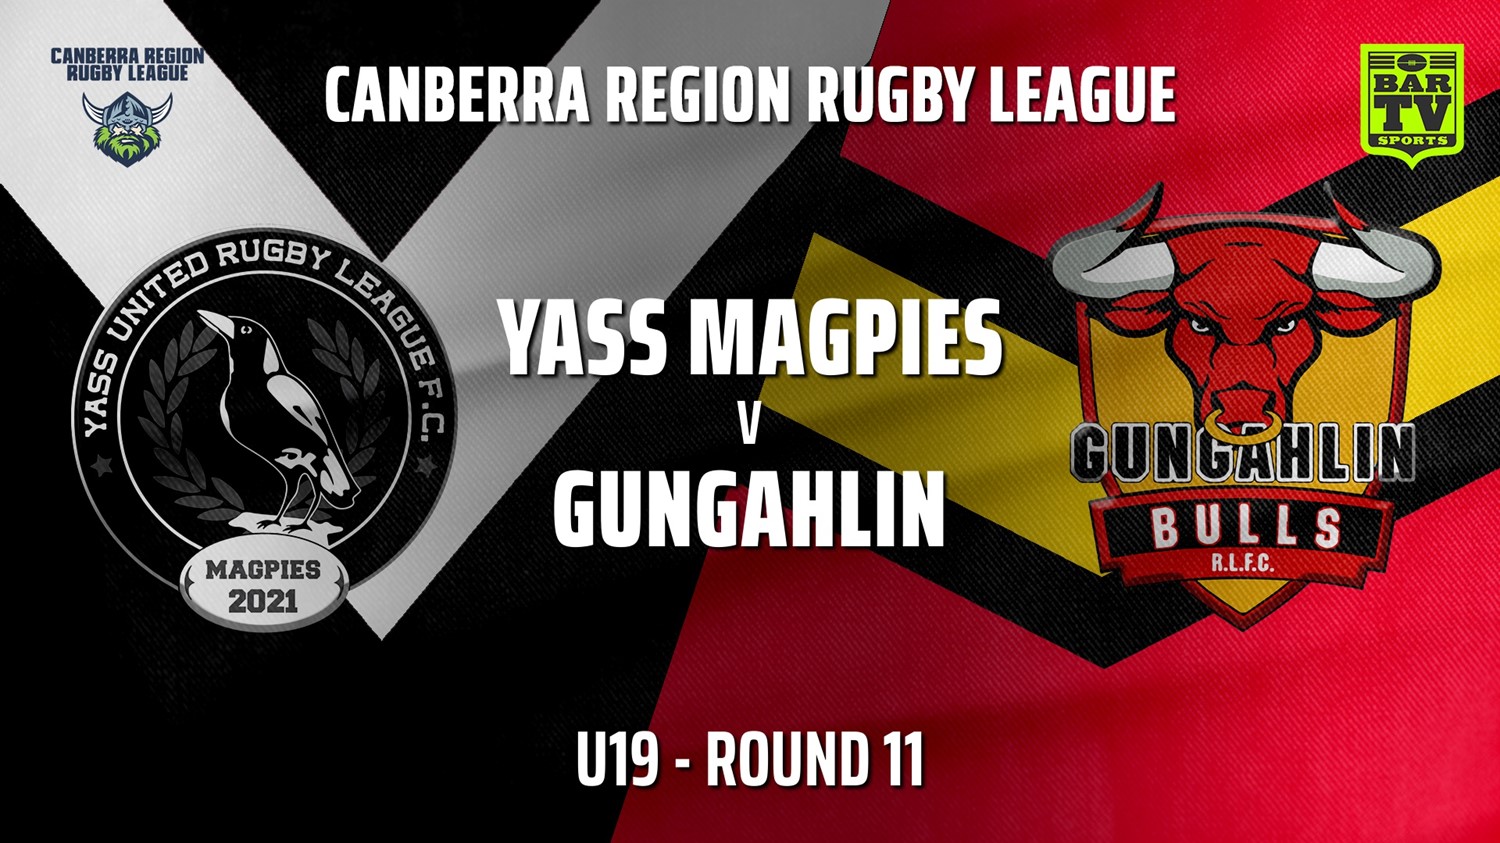 210710-Canberra Round 8 - U19 - Yass Magpies v Gungahlin Bulls Slate Image